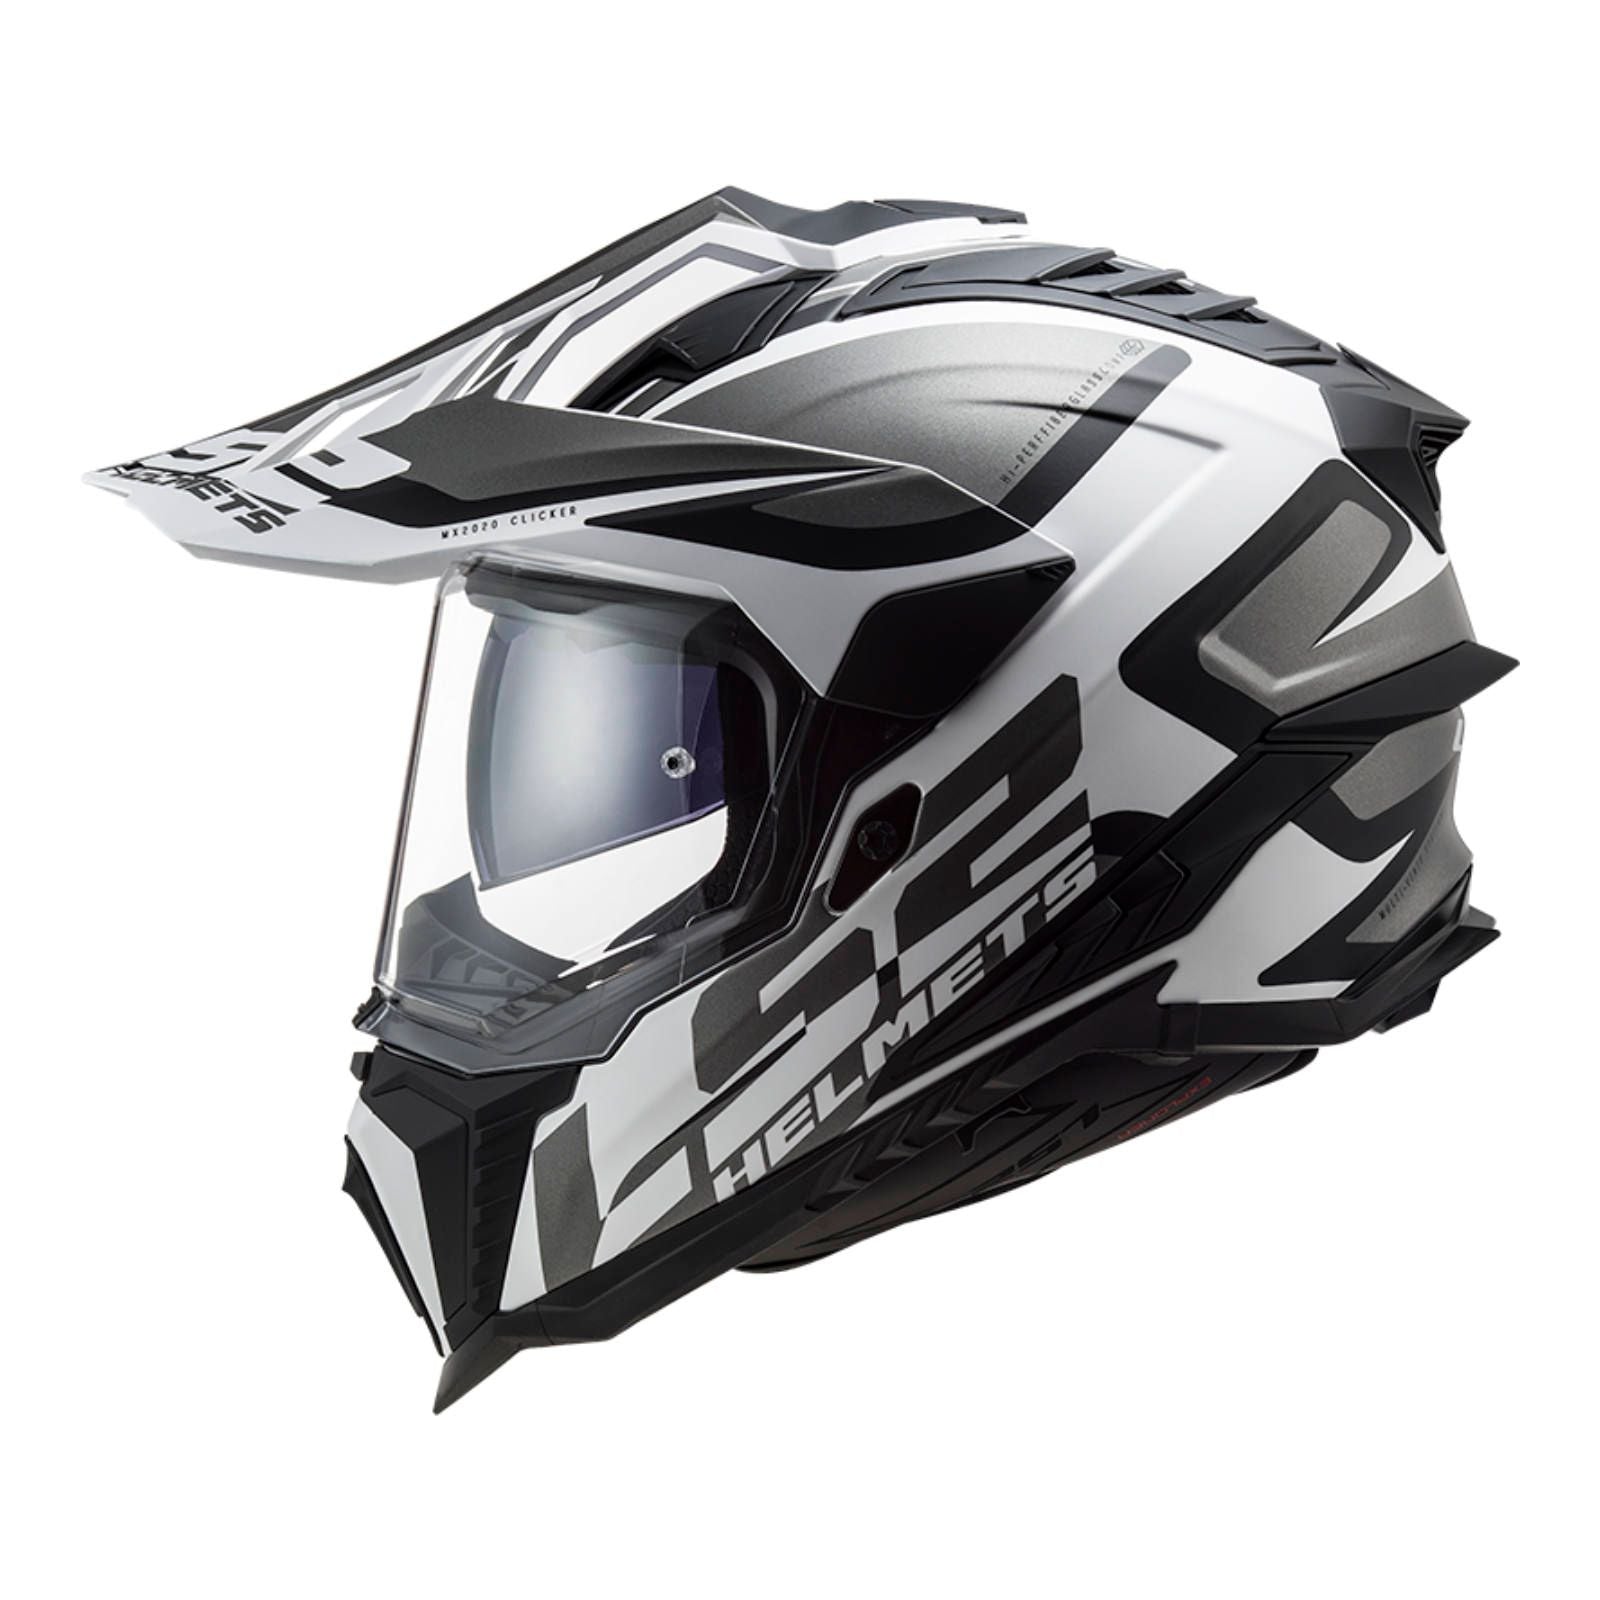 New LS2 Explorer Alter Helmet - Matte Black / White (S) #LS2MX701ALTMBWS